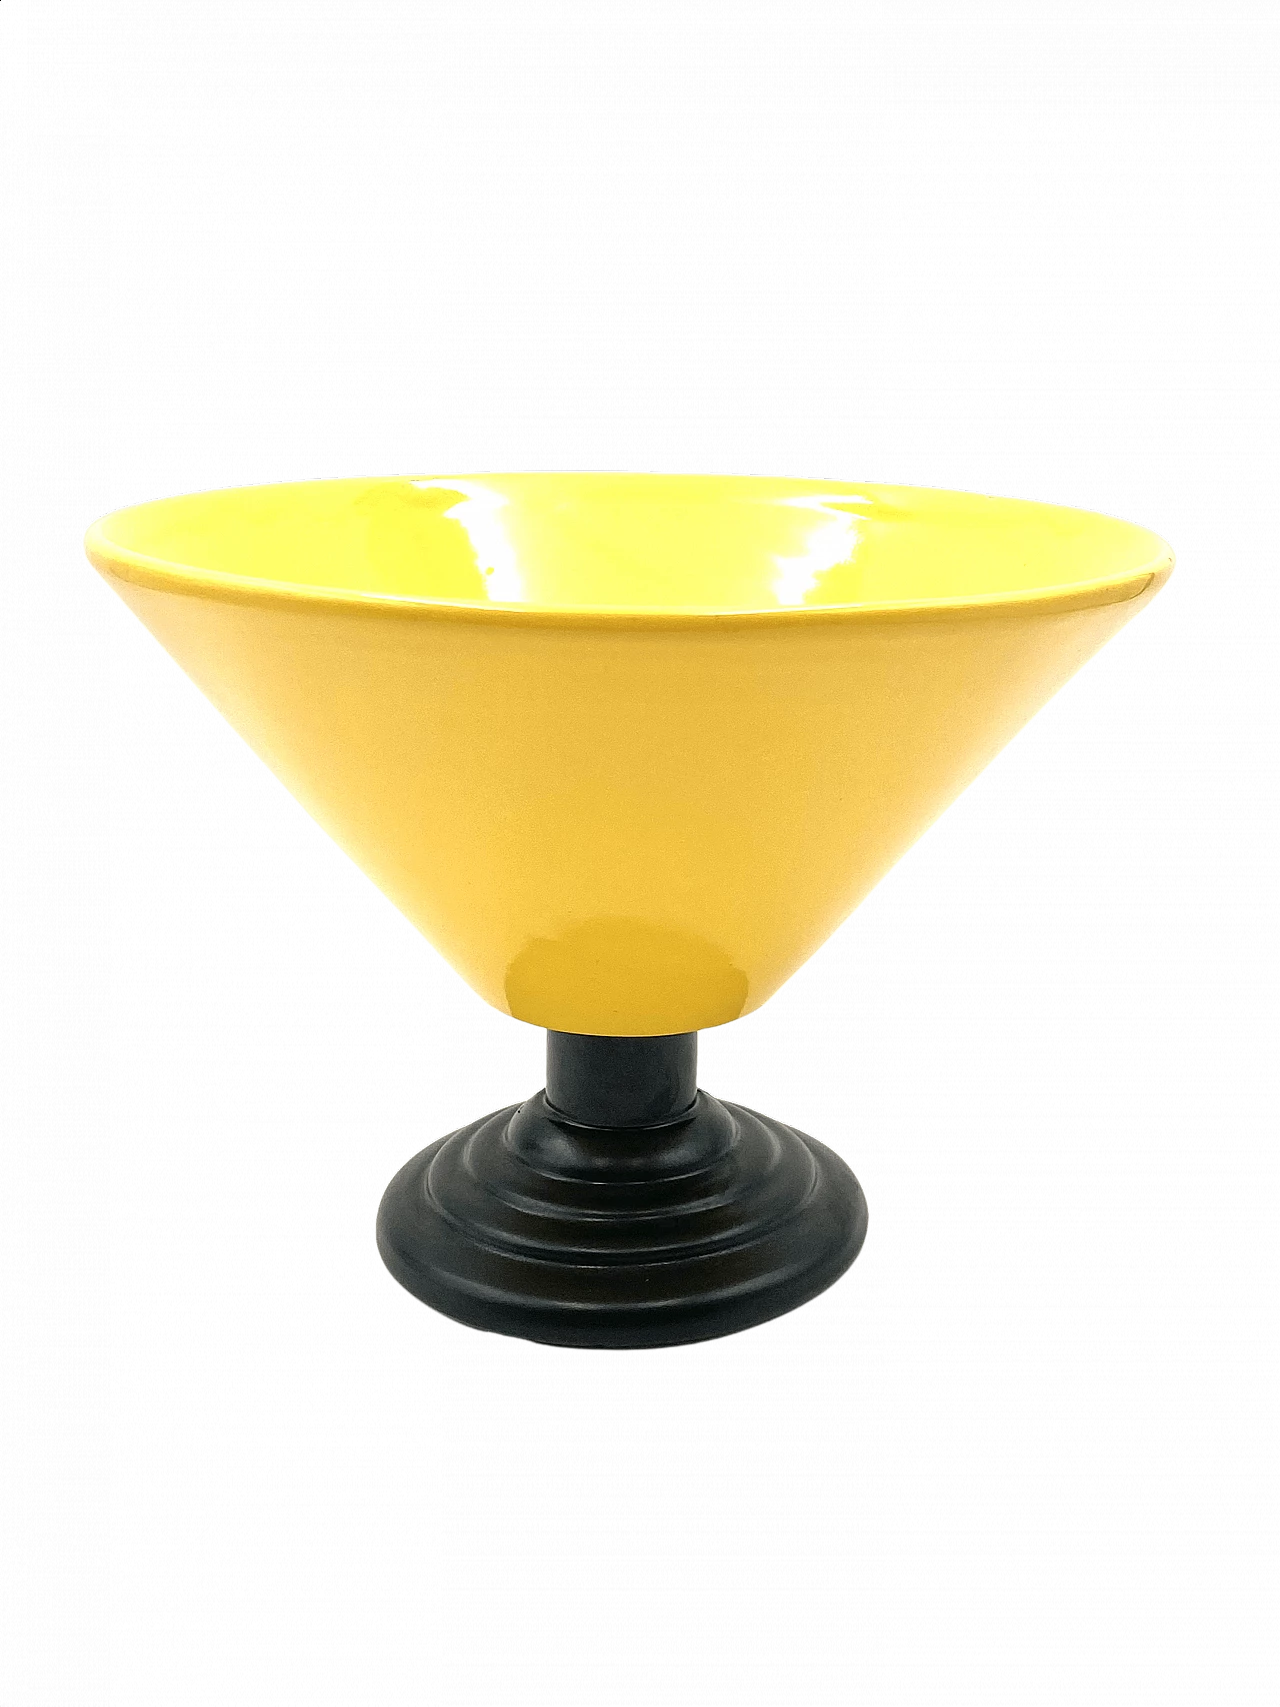 Postmodern yellow vase in Memphis style, 1980s 1380825